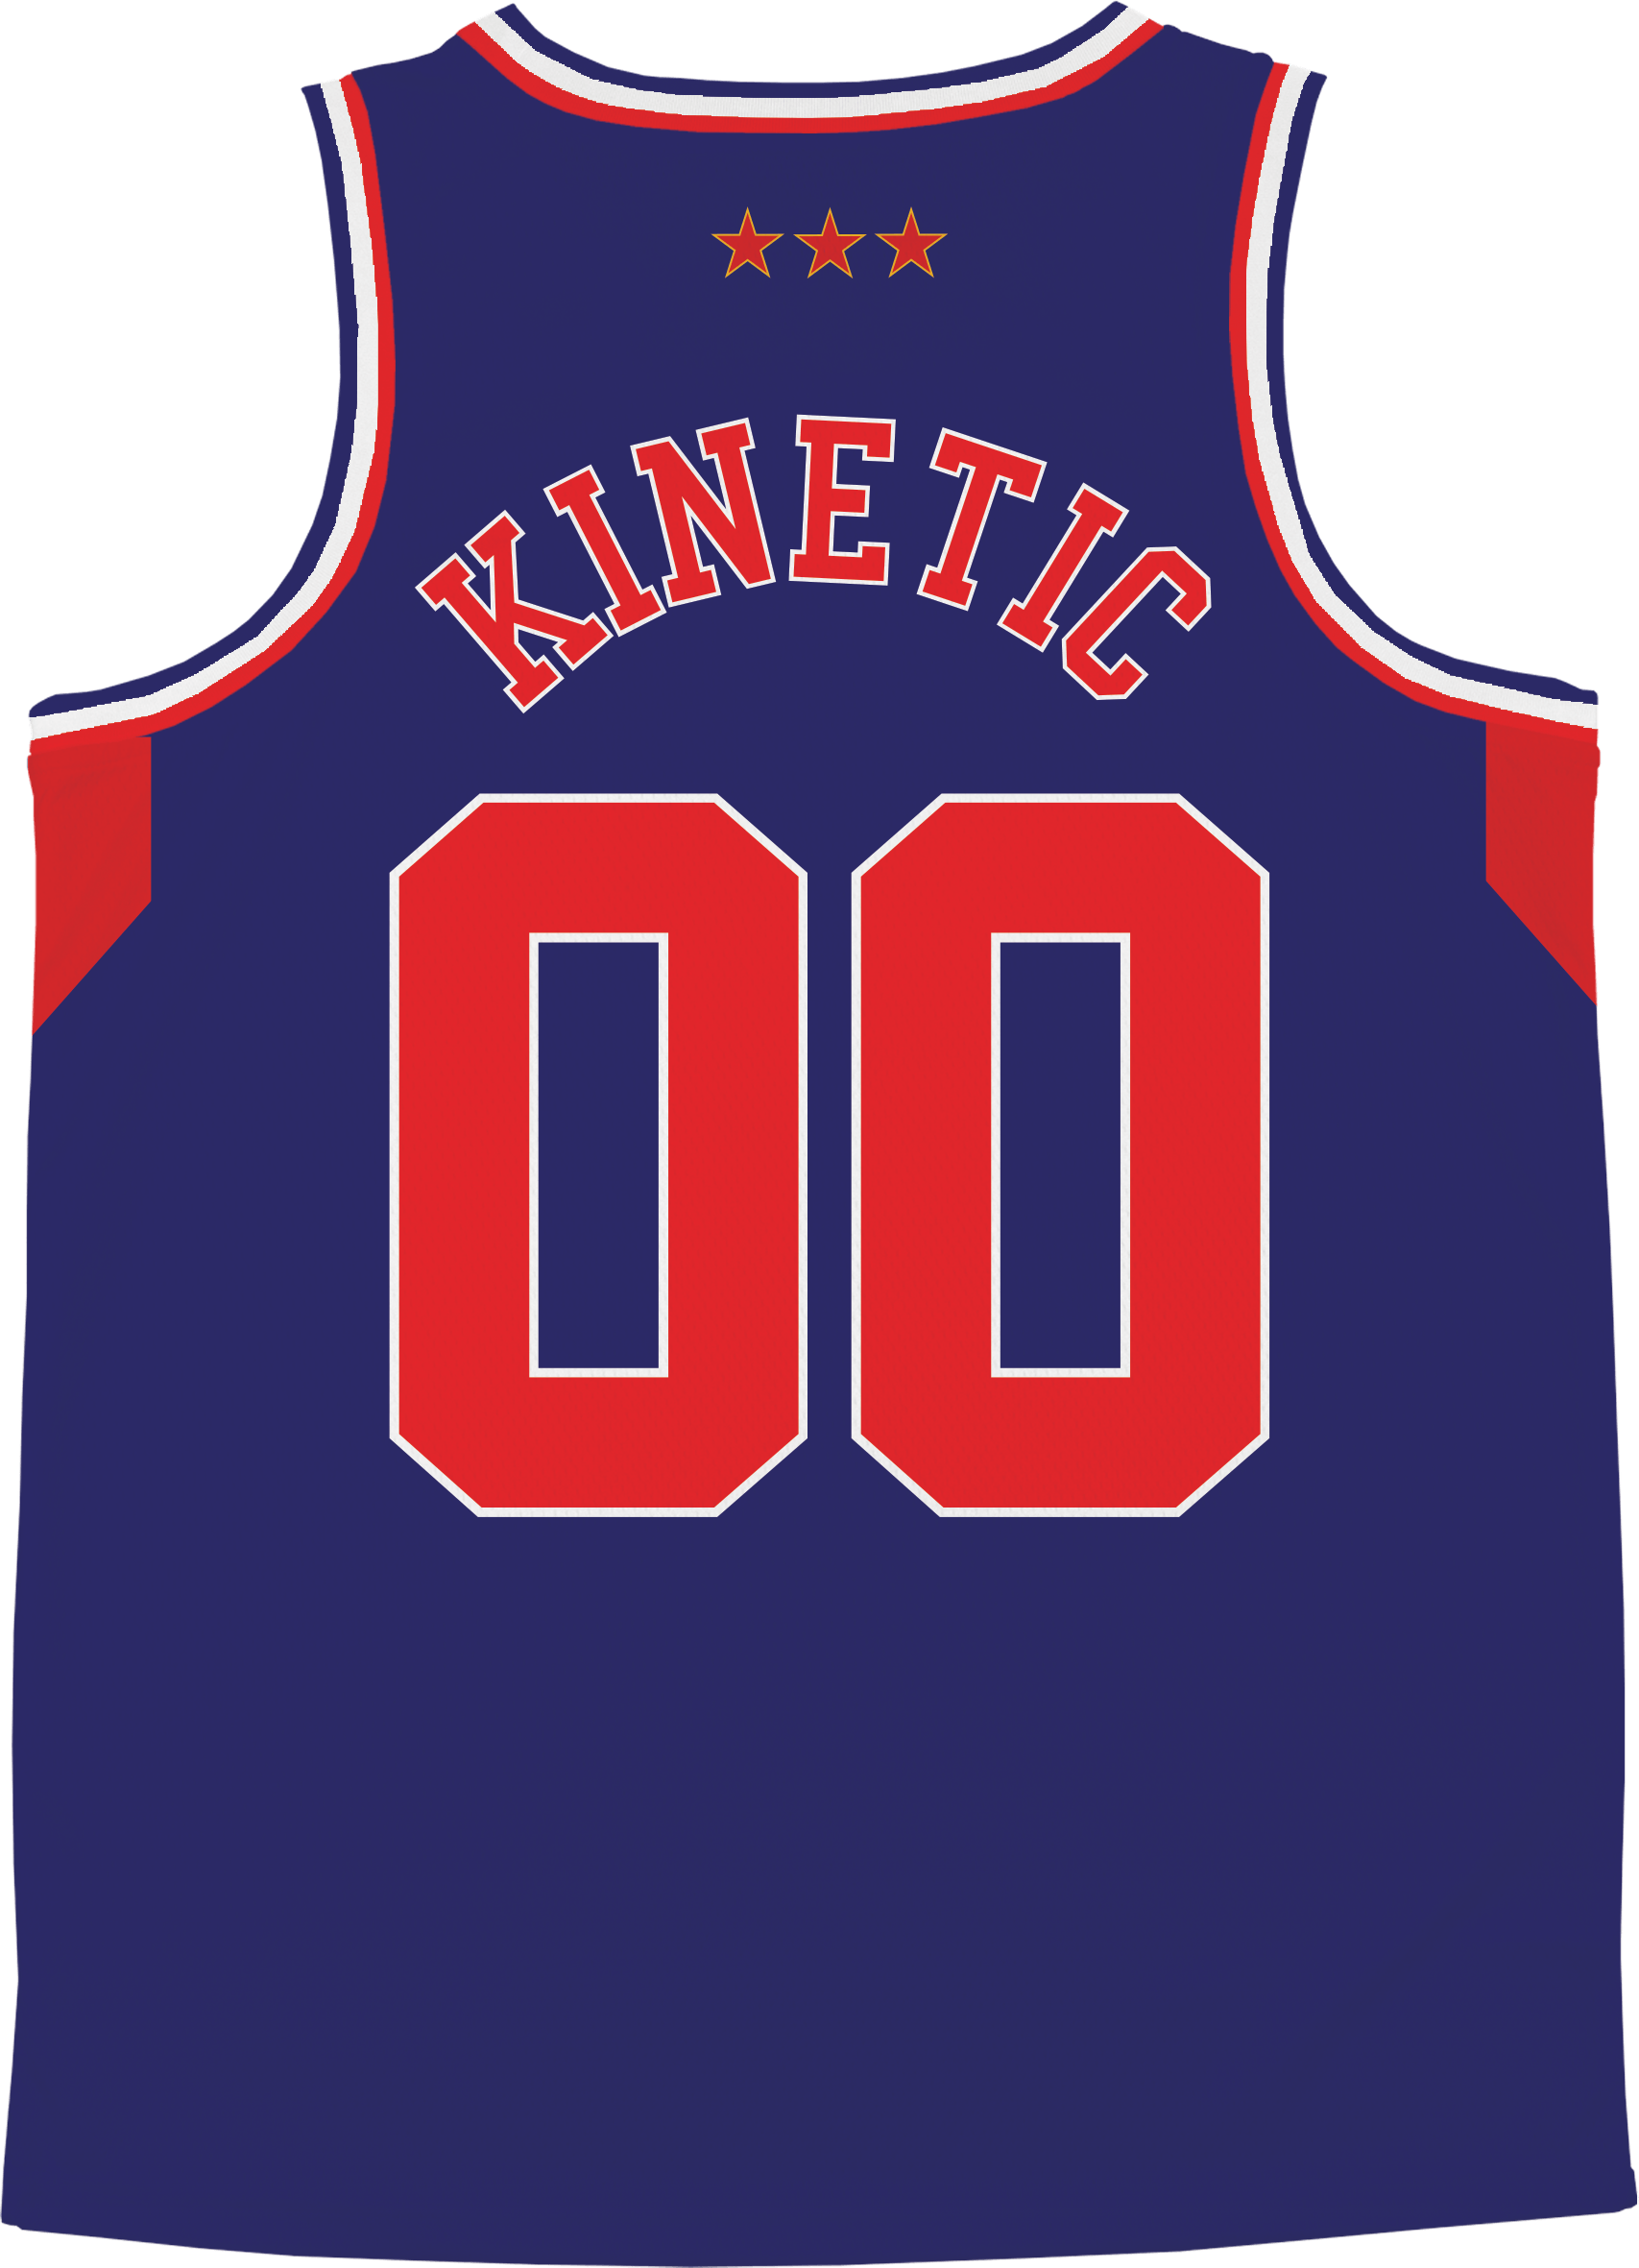 Alpha Sigma Phi - Retro Ballers Basketball Jersey - Kinetic Society